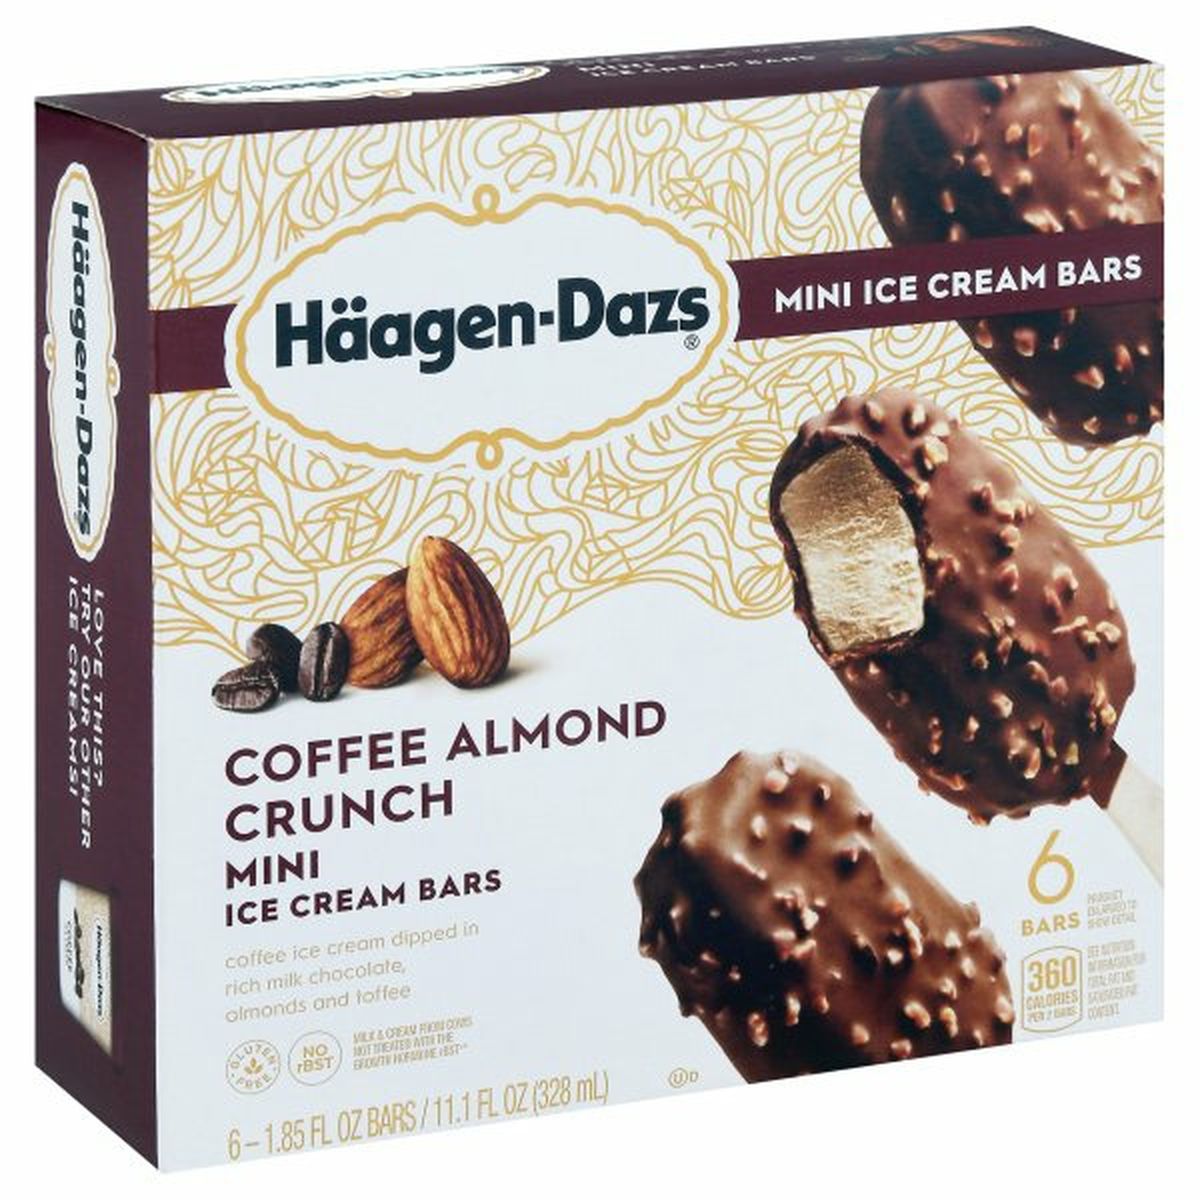 Calories in Haagen-Dazs Ice Cream Bars, Coffee Almond Crunch, Mini